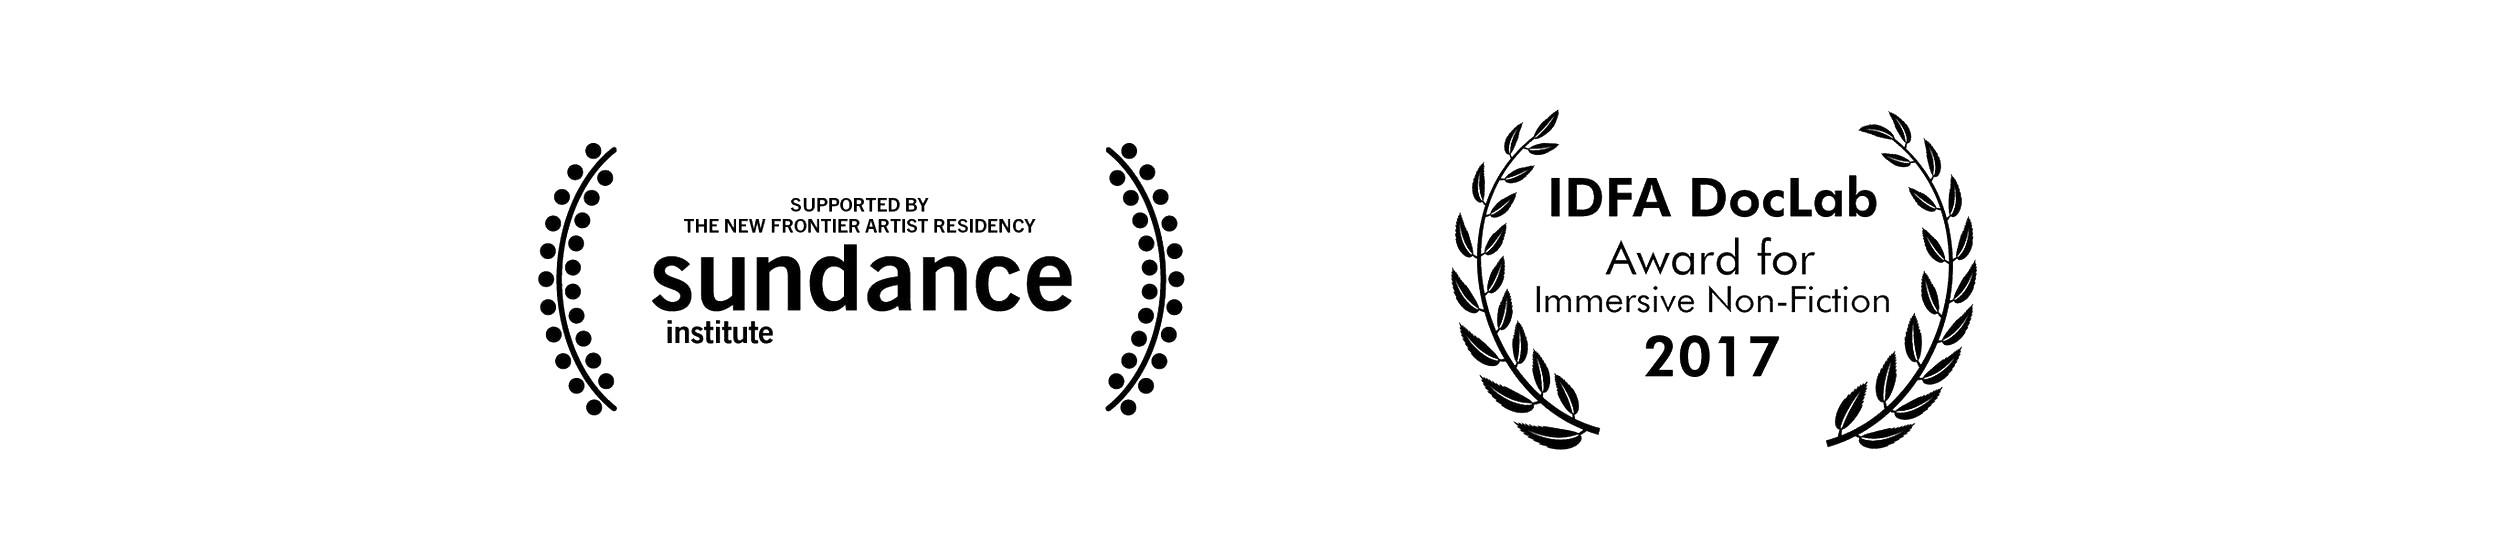 logos from sundance and idfa doclab